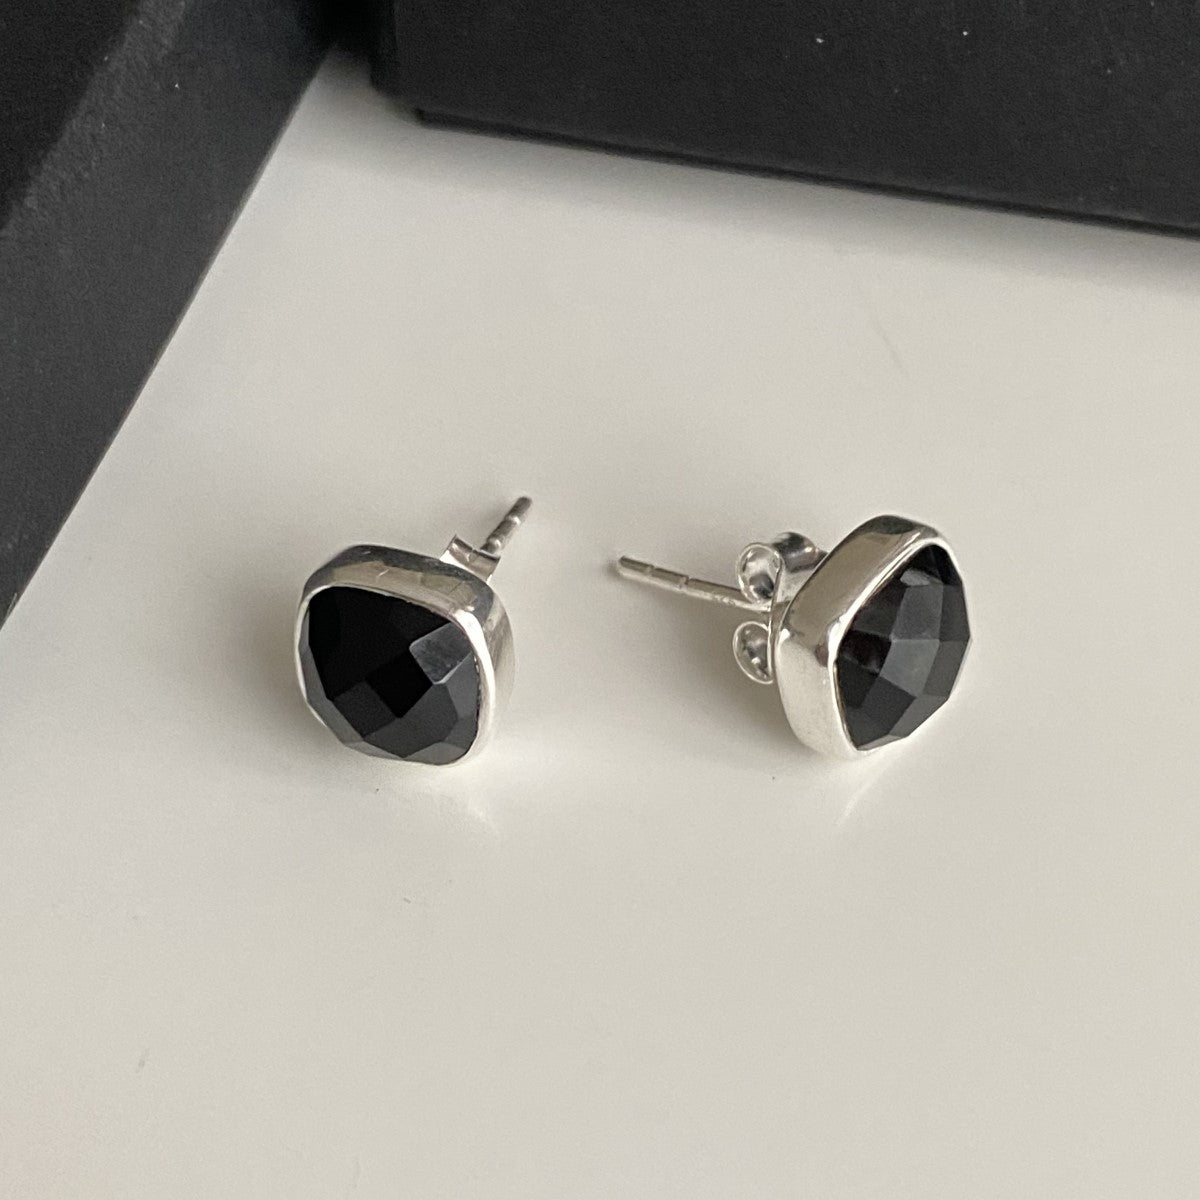 Faceted Square Black Onyx Gemstone Stud Earrings in Sterling Silver